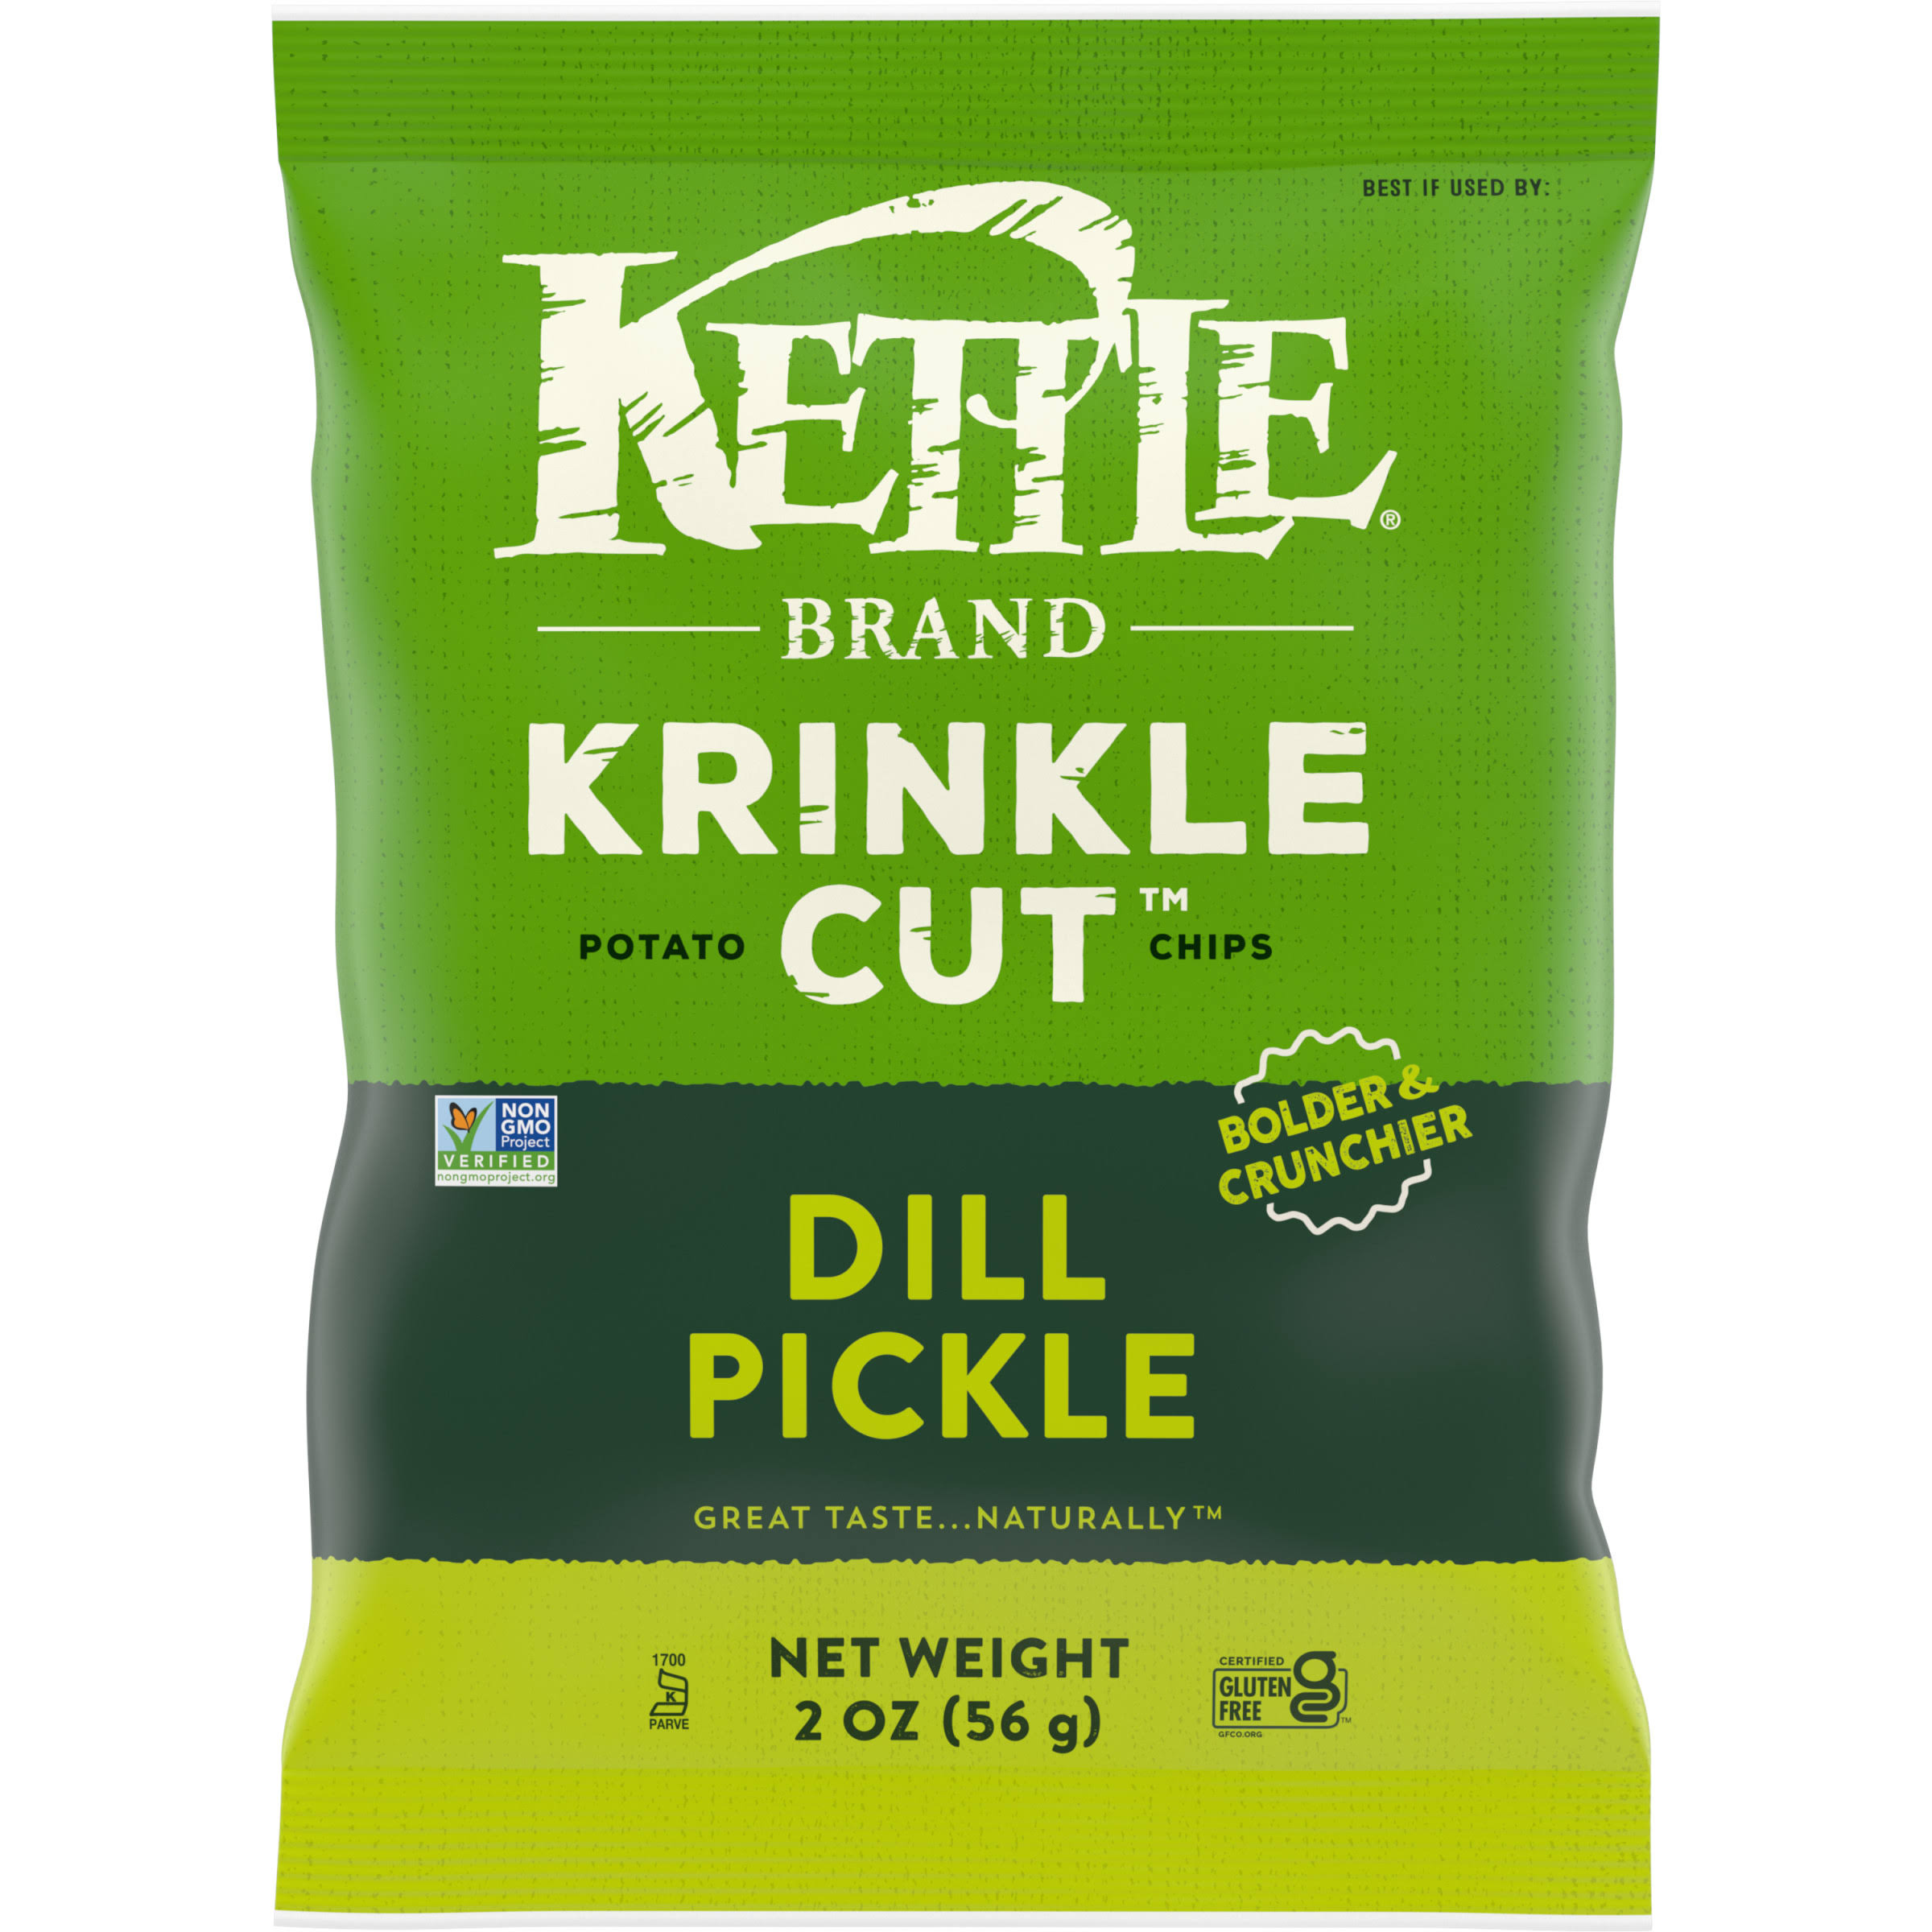 Kettle Brand Krinkle Cut Potato Chips, Dill Pickle - 2 oz